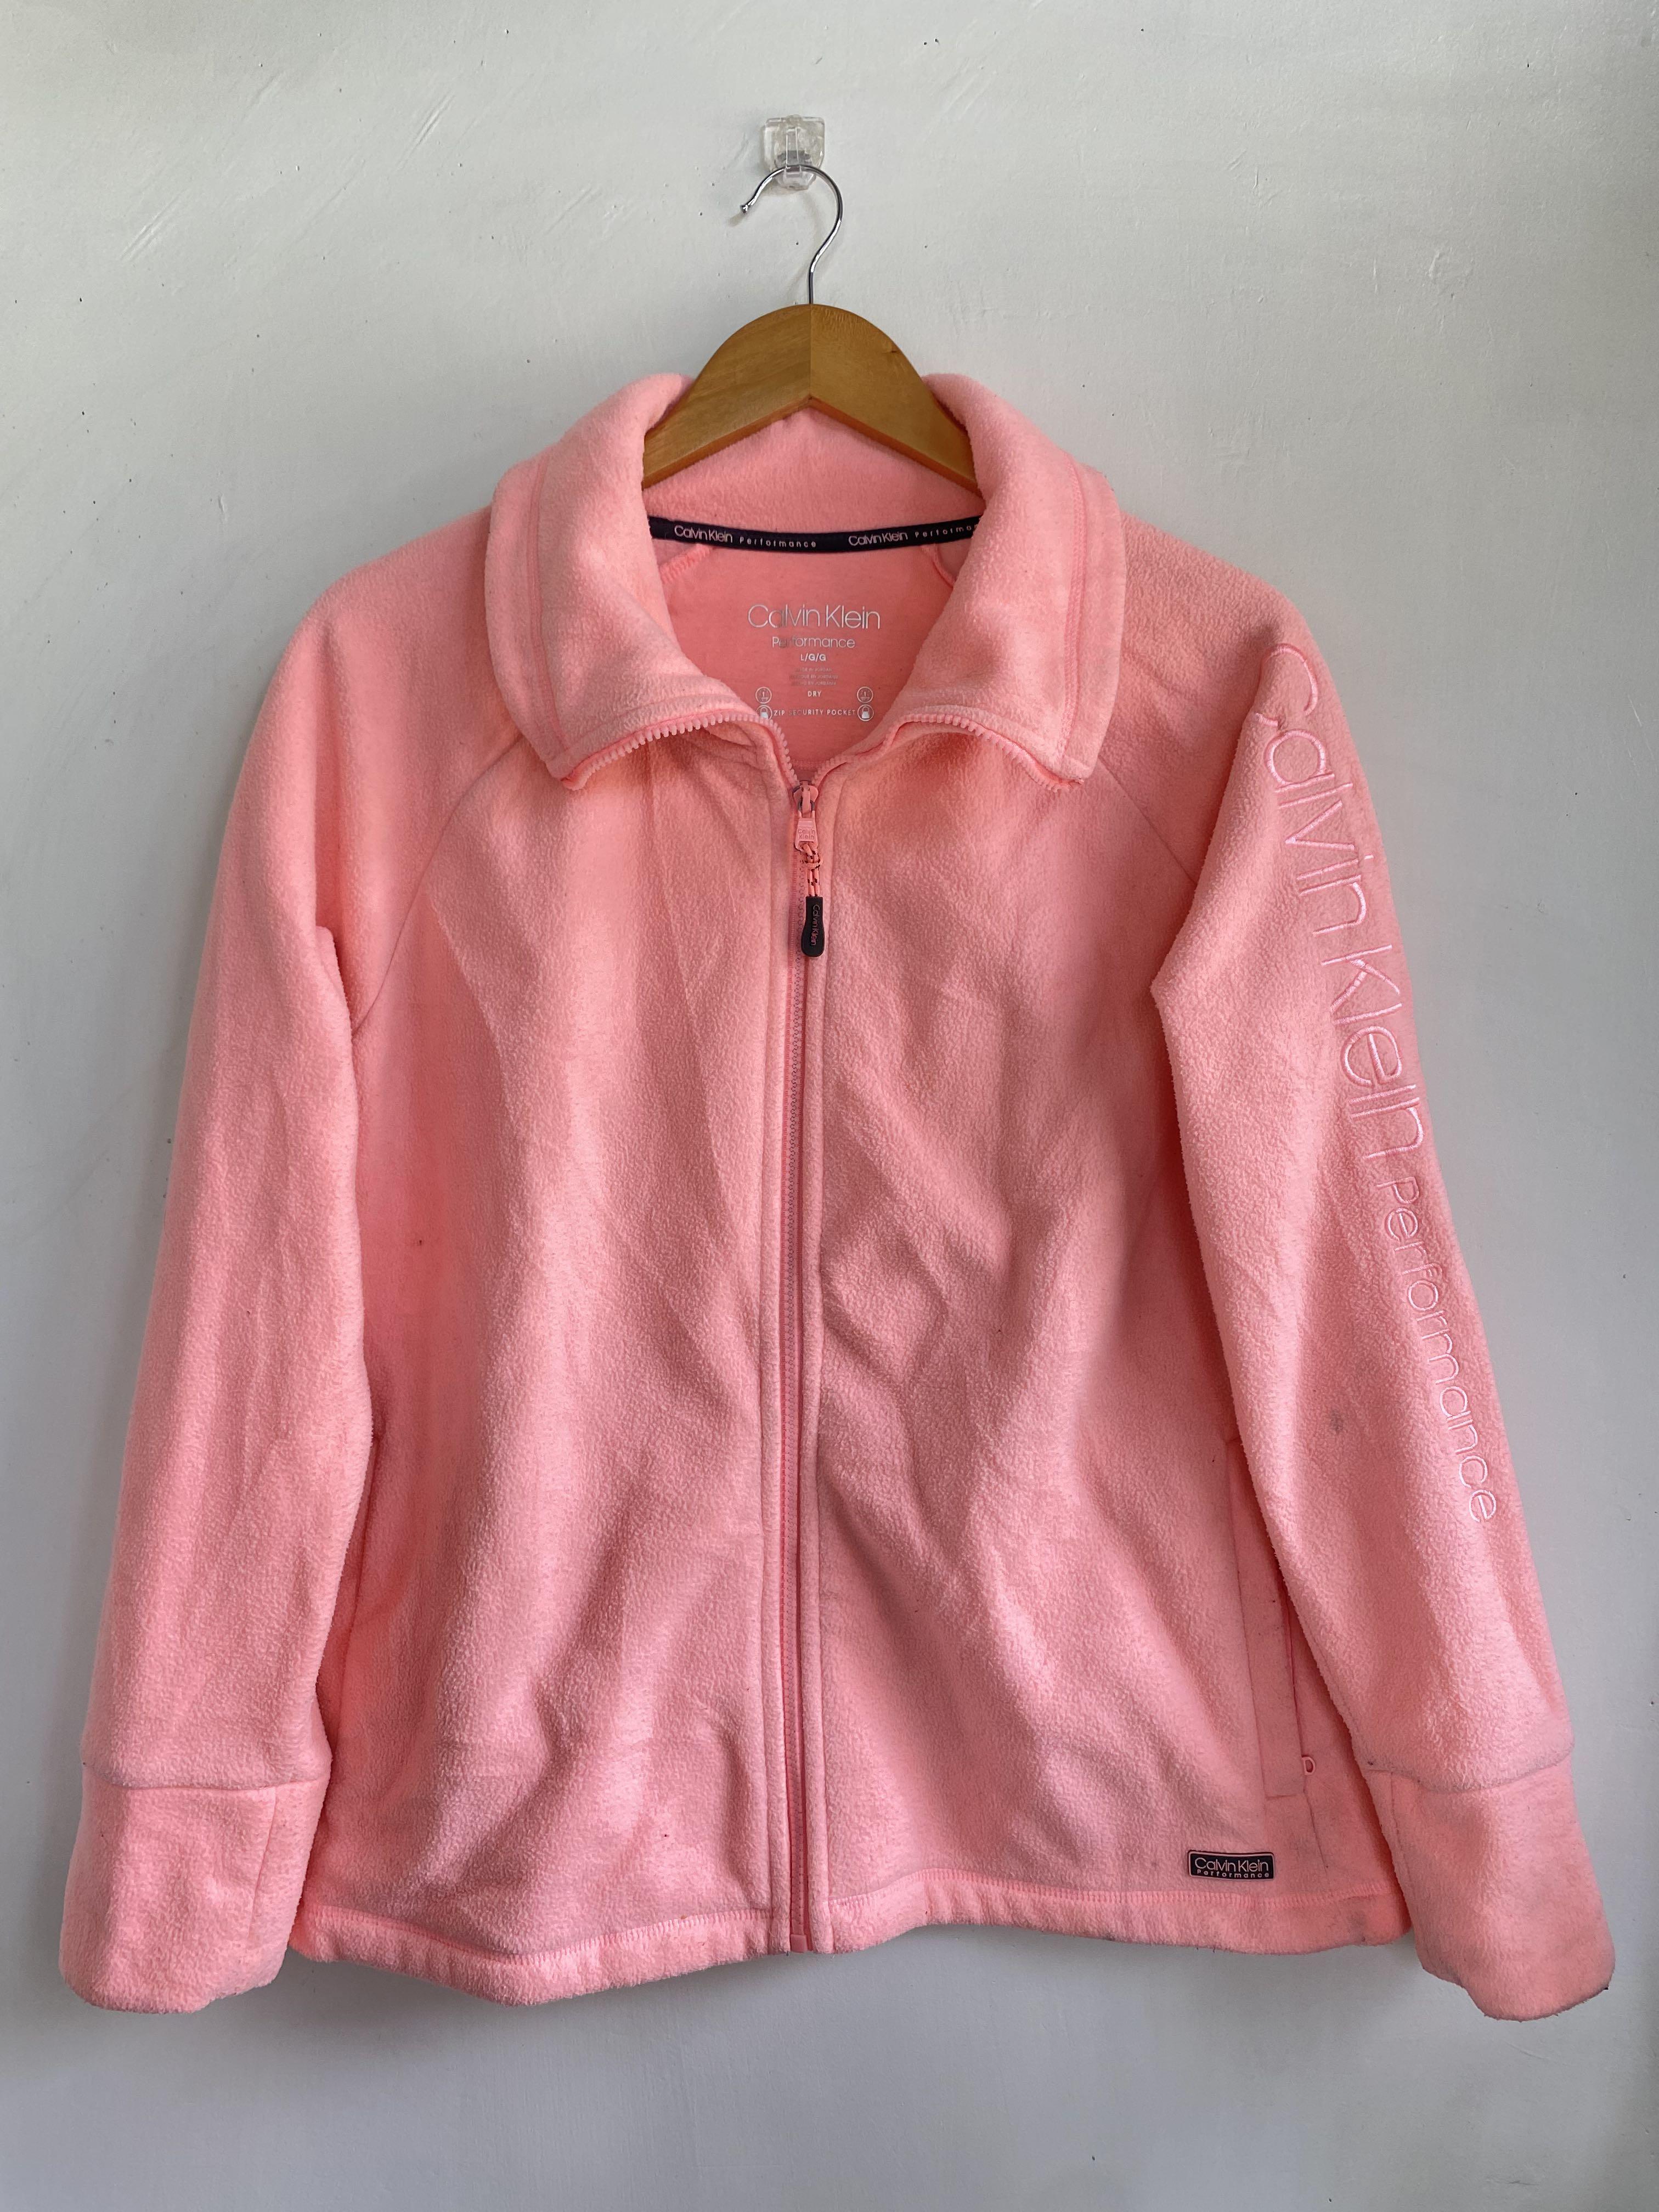 Large Pink Calvin Klein Performance Jacket for Sale in Las Vegas, NV -  OfferUp